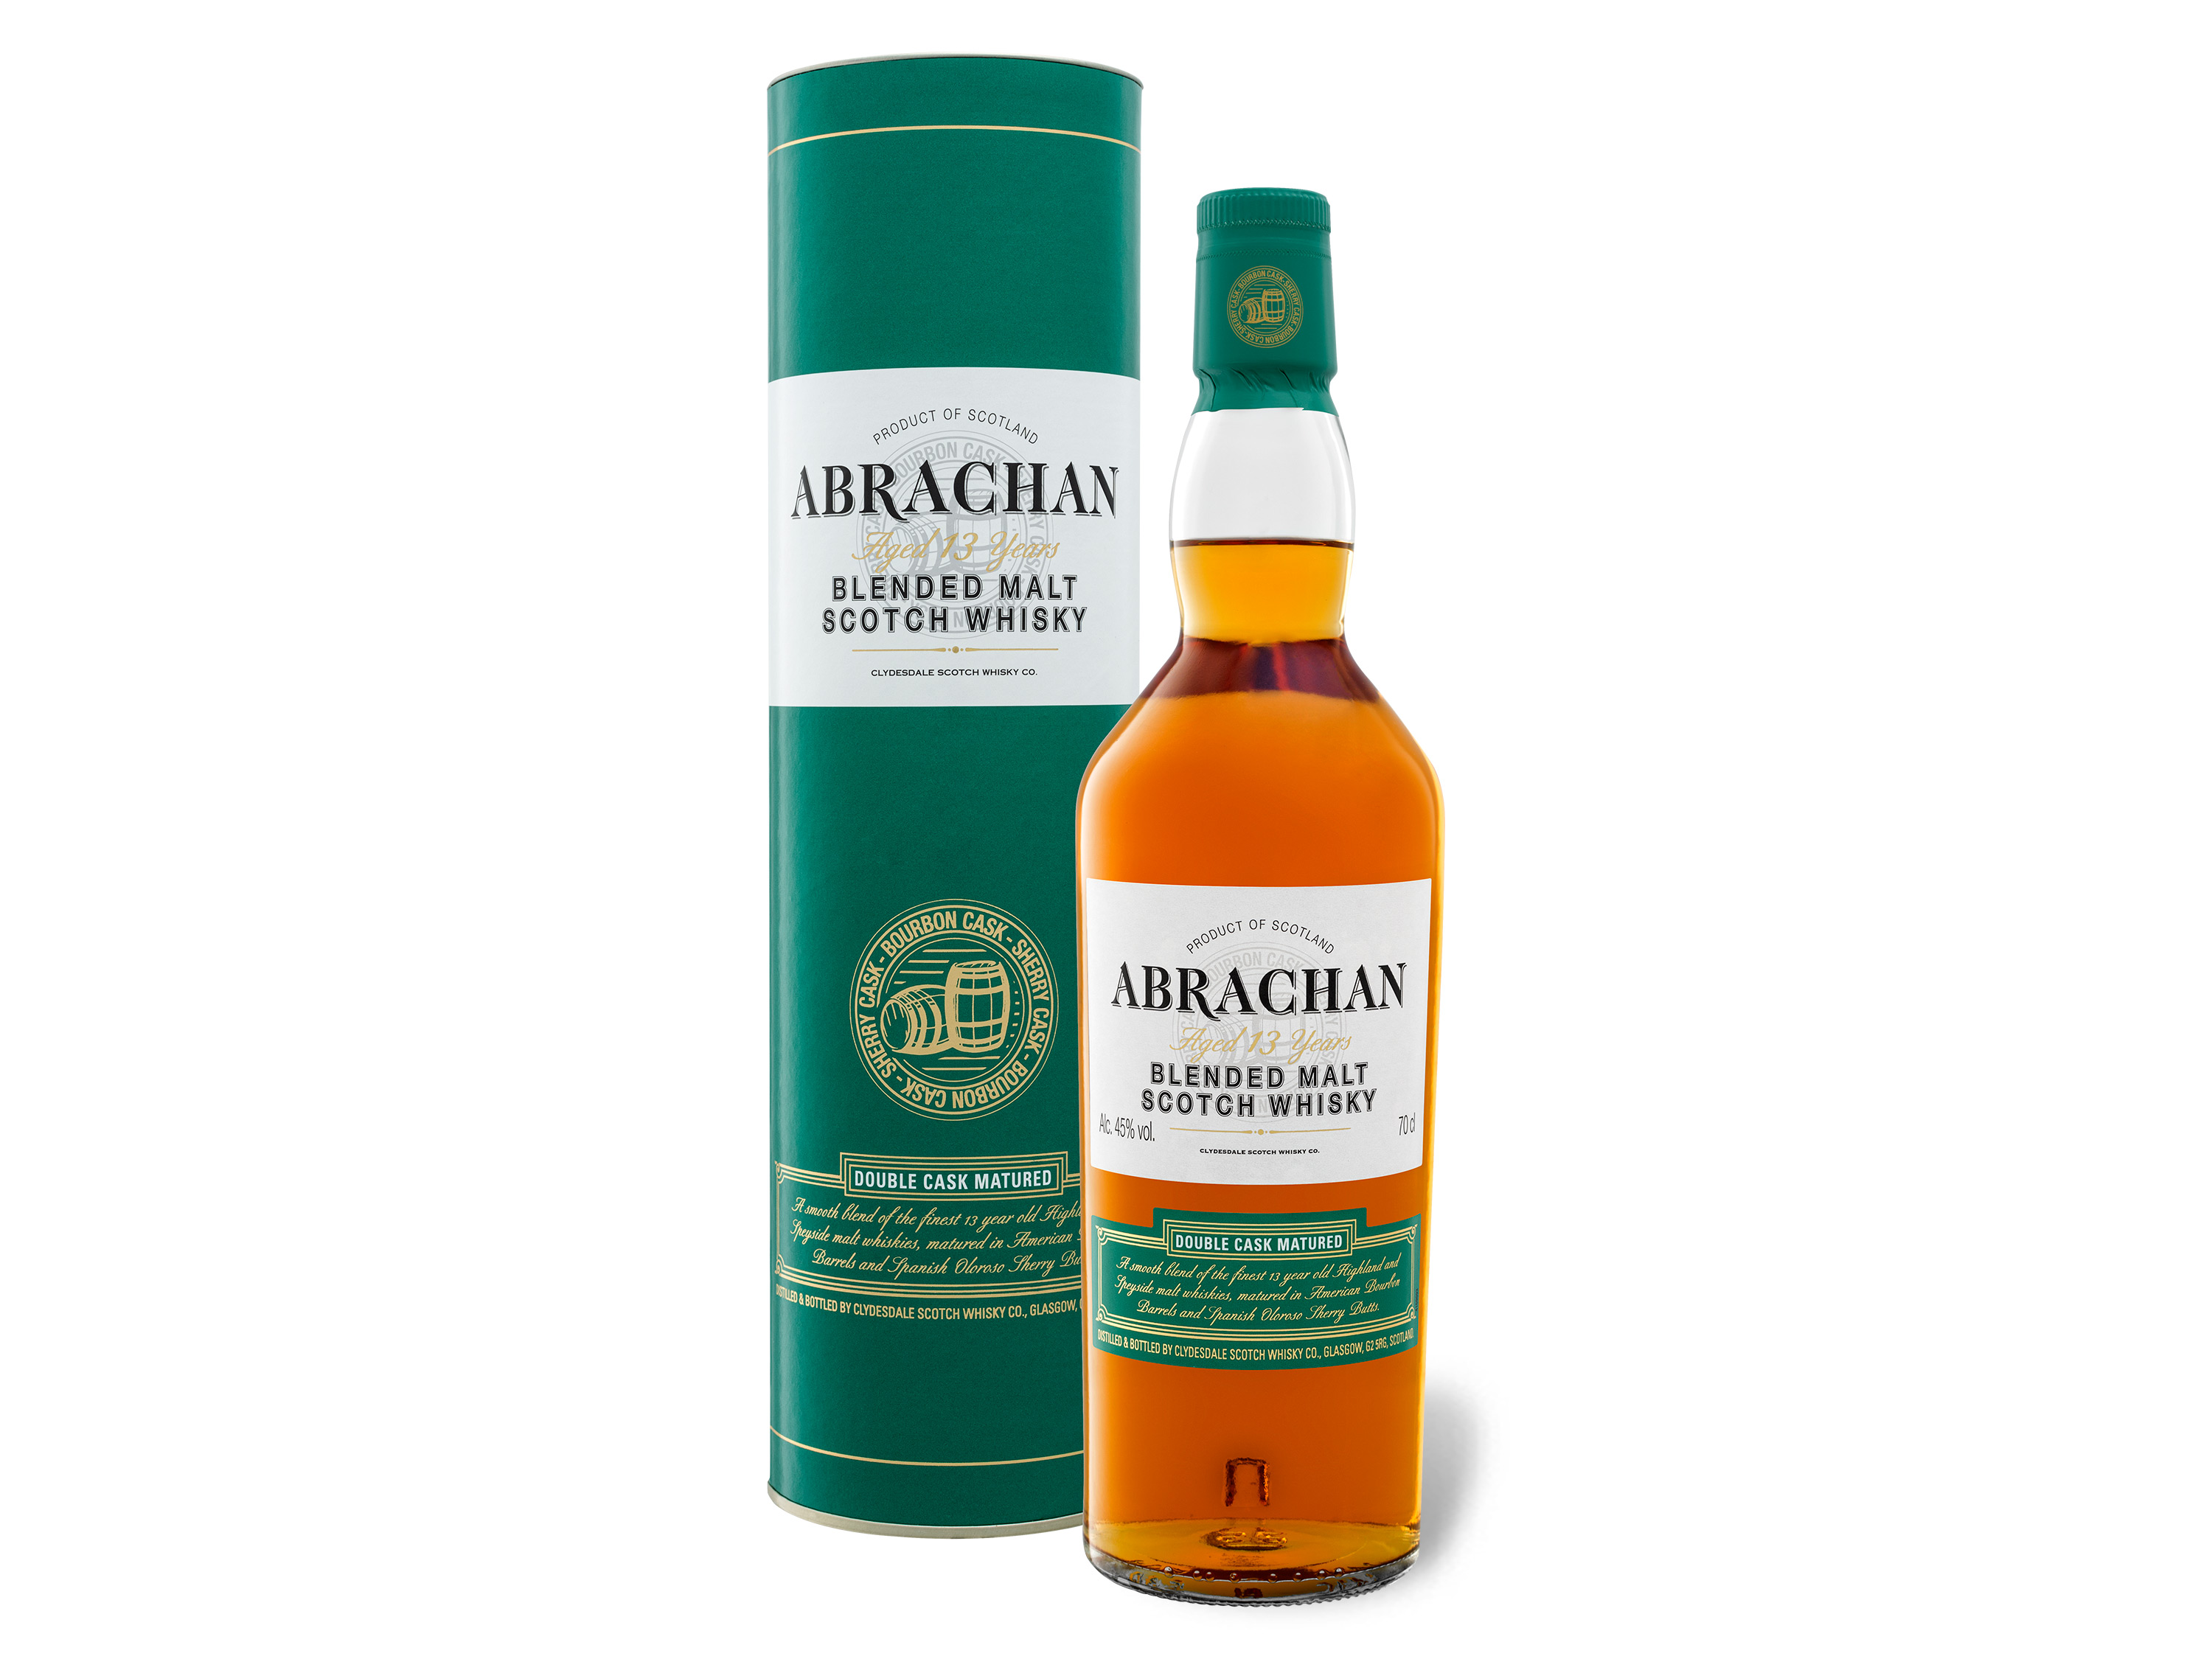 Abrachan Double Cask Matured Blended Malt Scotch Whisky 13 Jahre 45% Vol